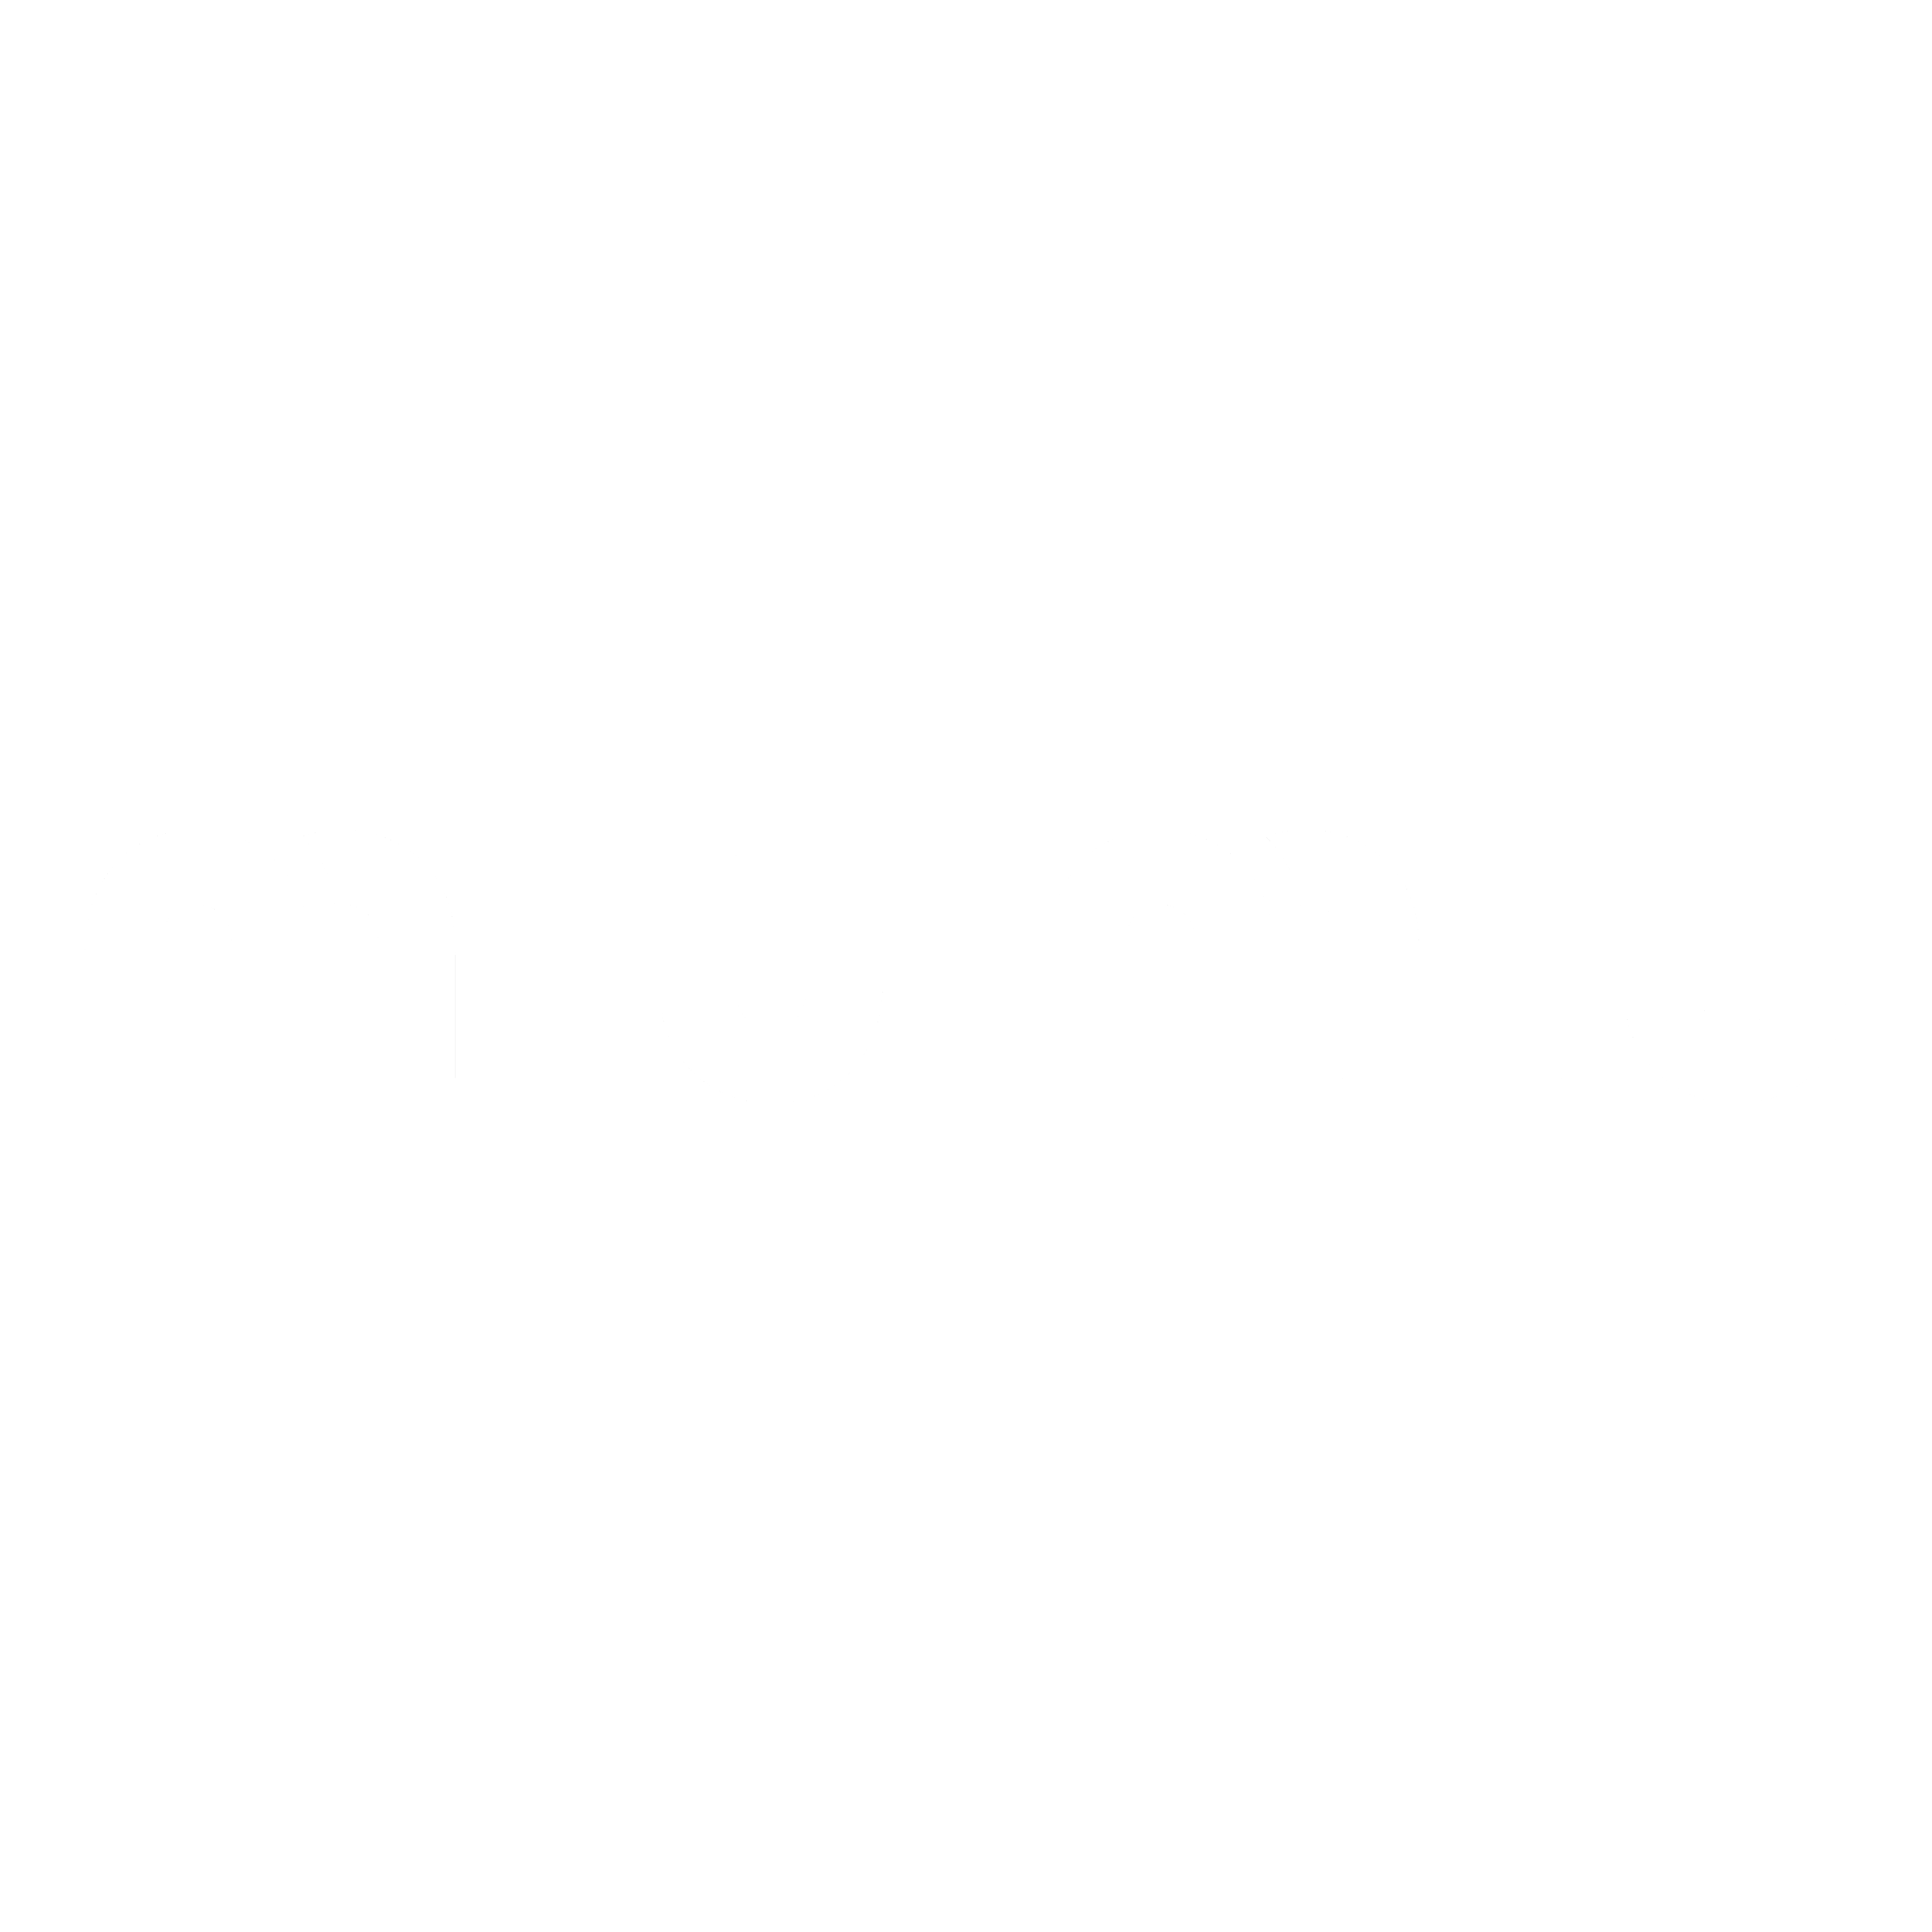 Miu Miu Logo - Miu Miu Logo PNG Transparent & SVG Vector - Freebie Supply